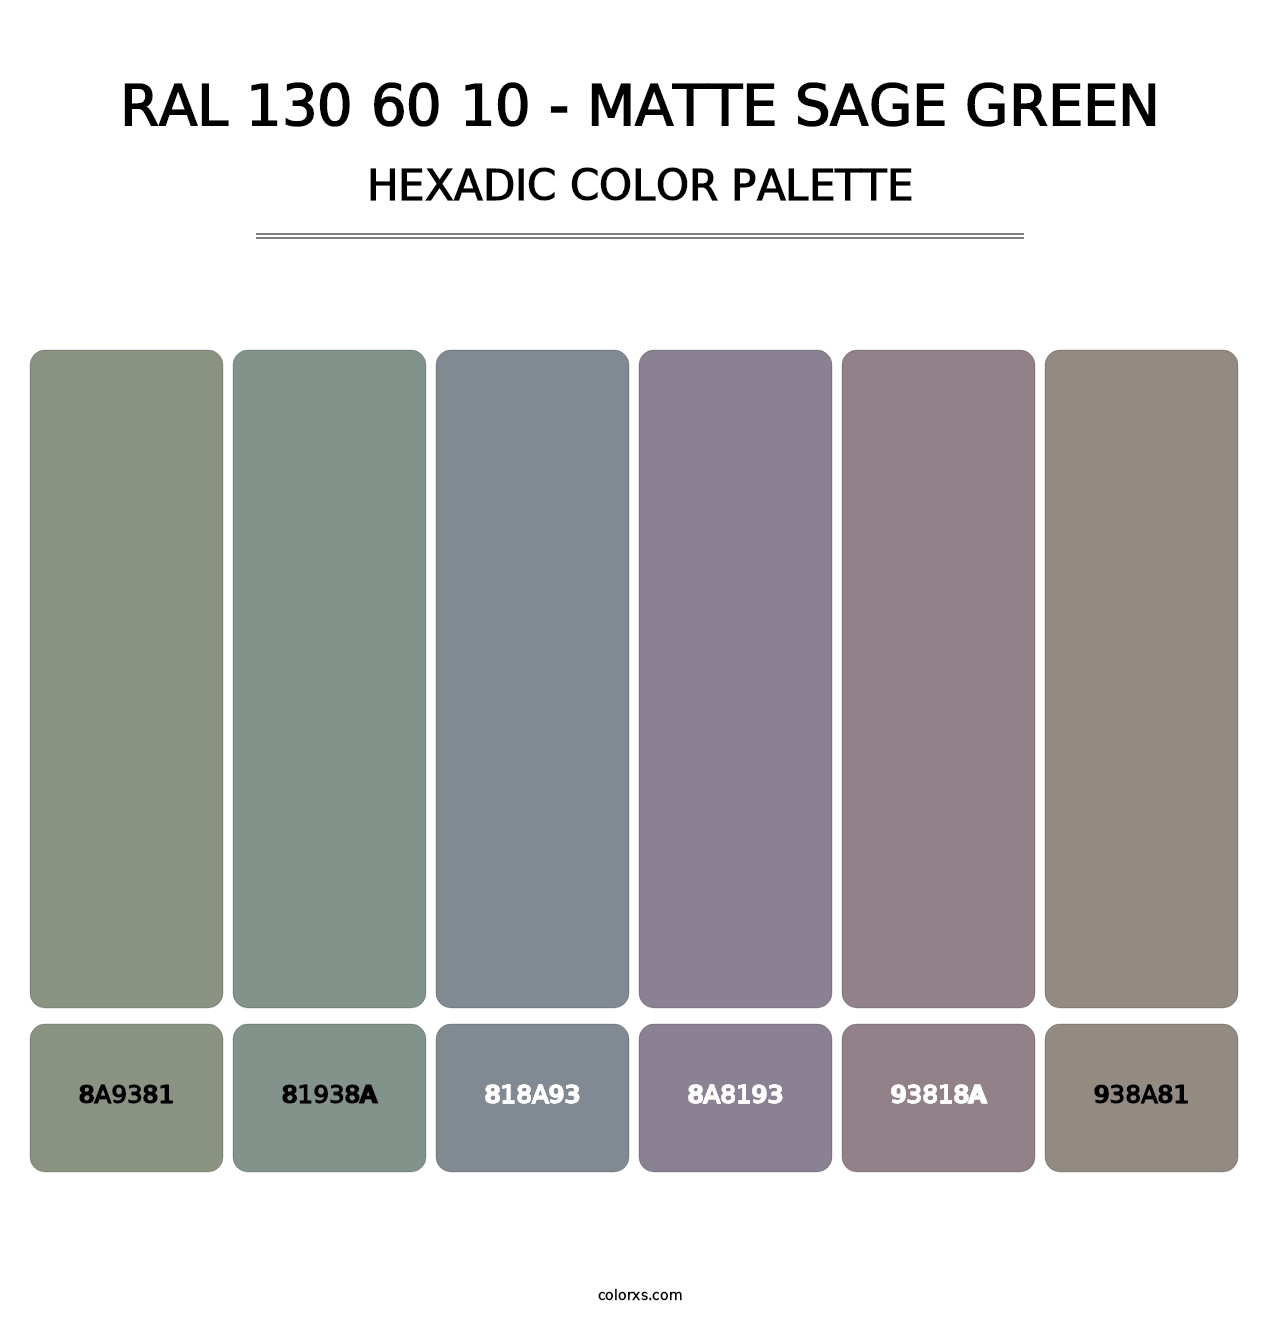 RAL 130 60 10 - Matte Sage Green - Hexadic Color Palette